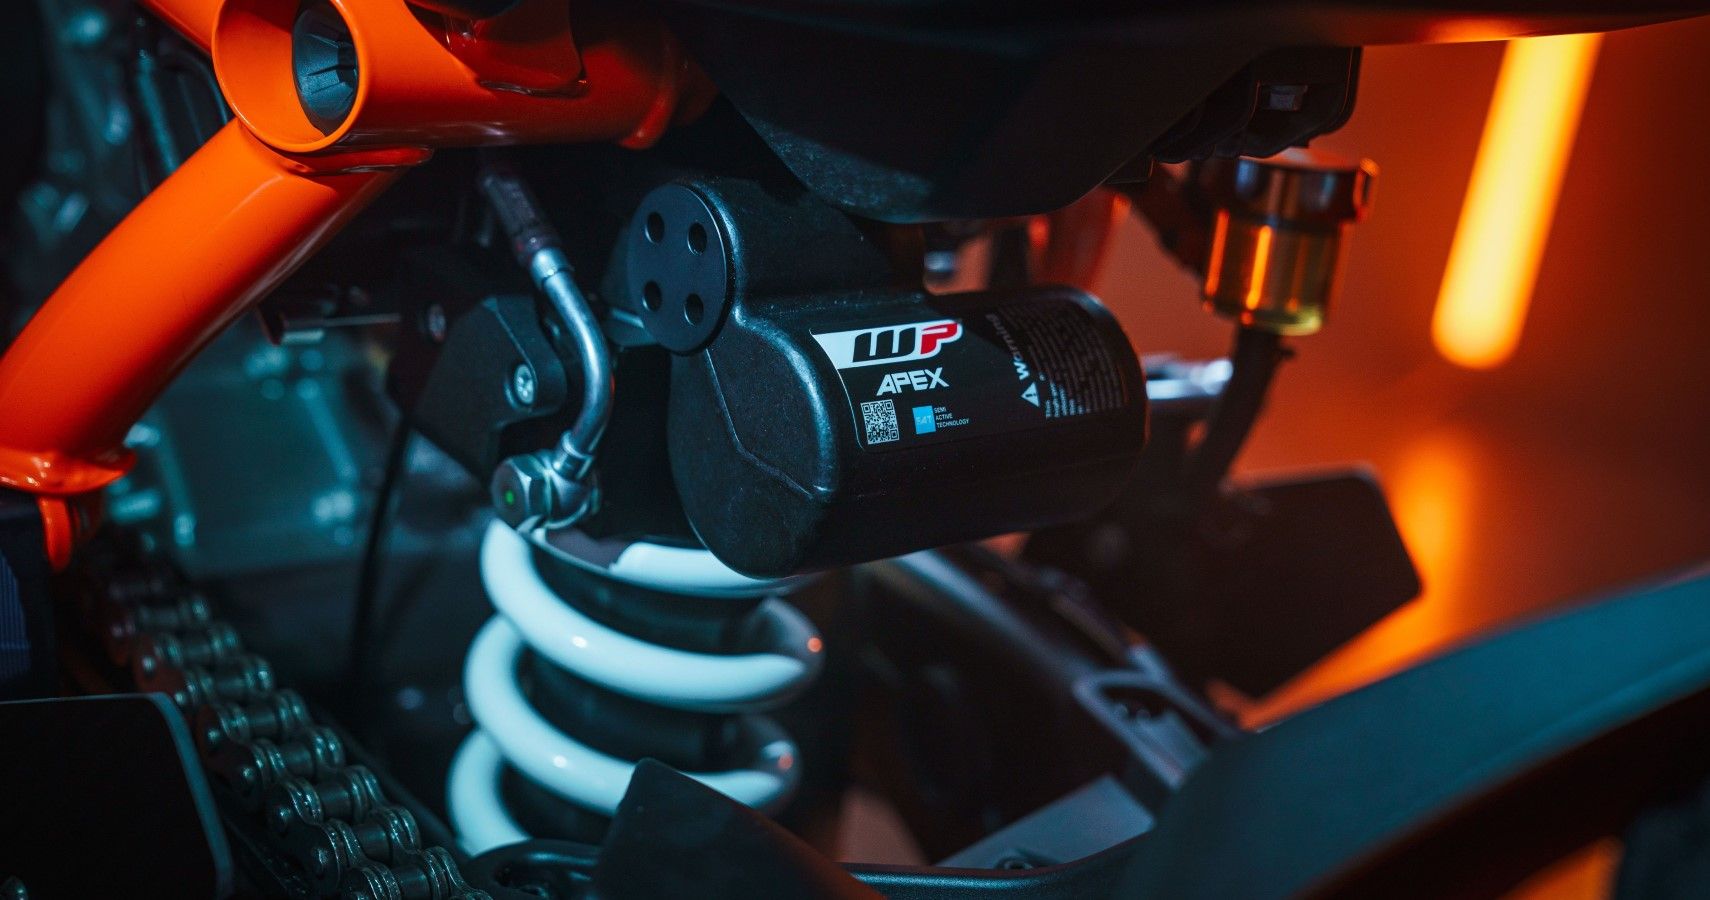 2022 KTM 1290 Super Duke R EVO electronically adjustable rear monoshock close-up view